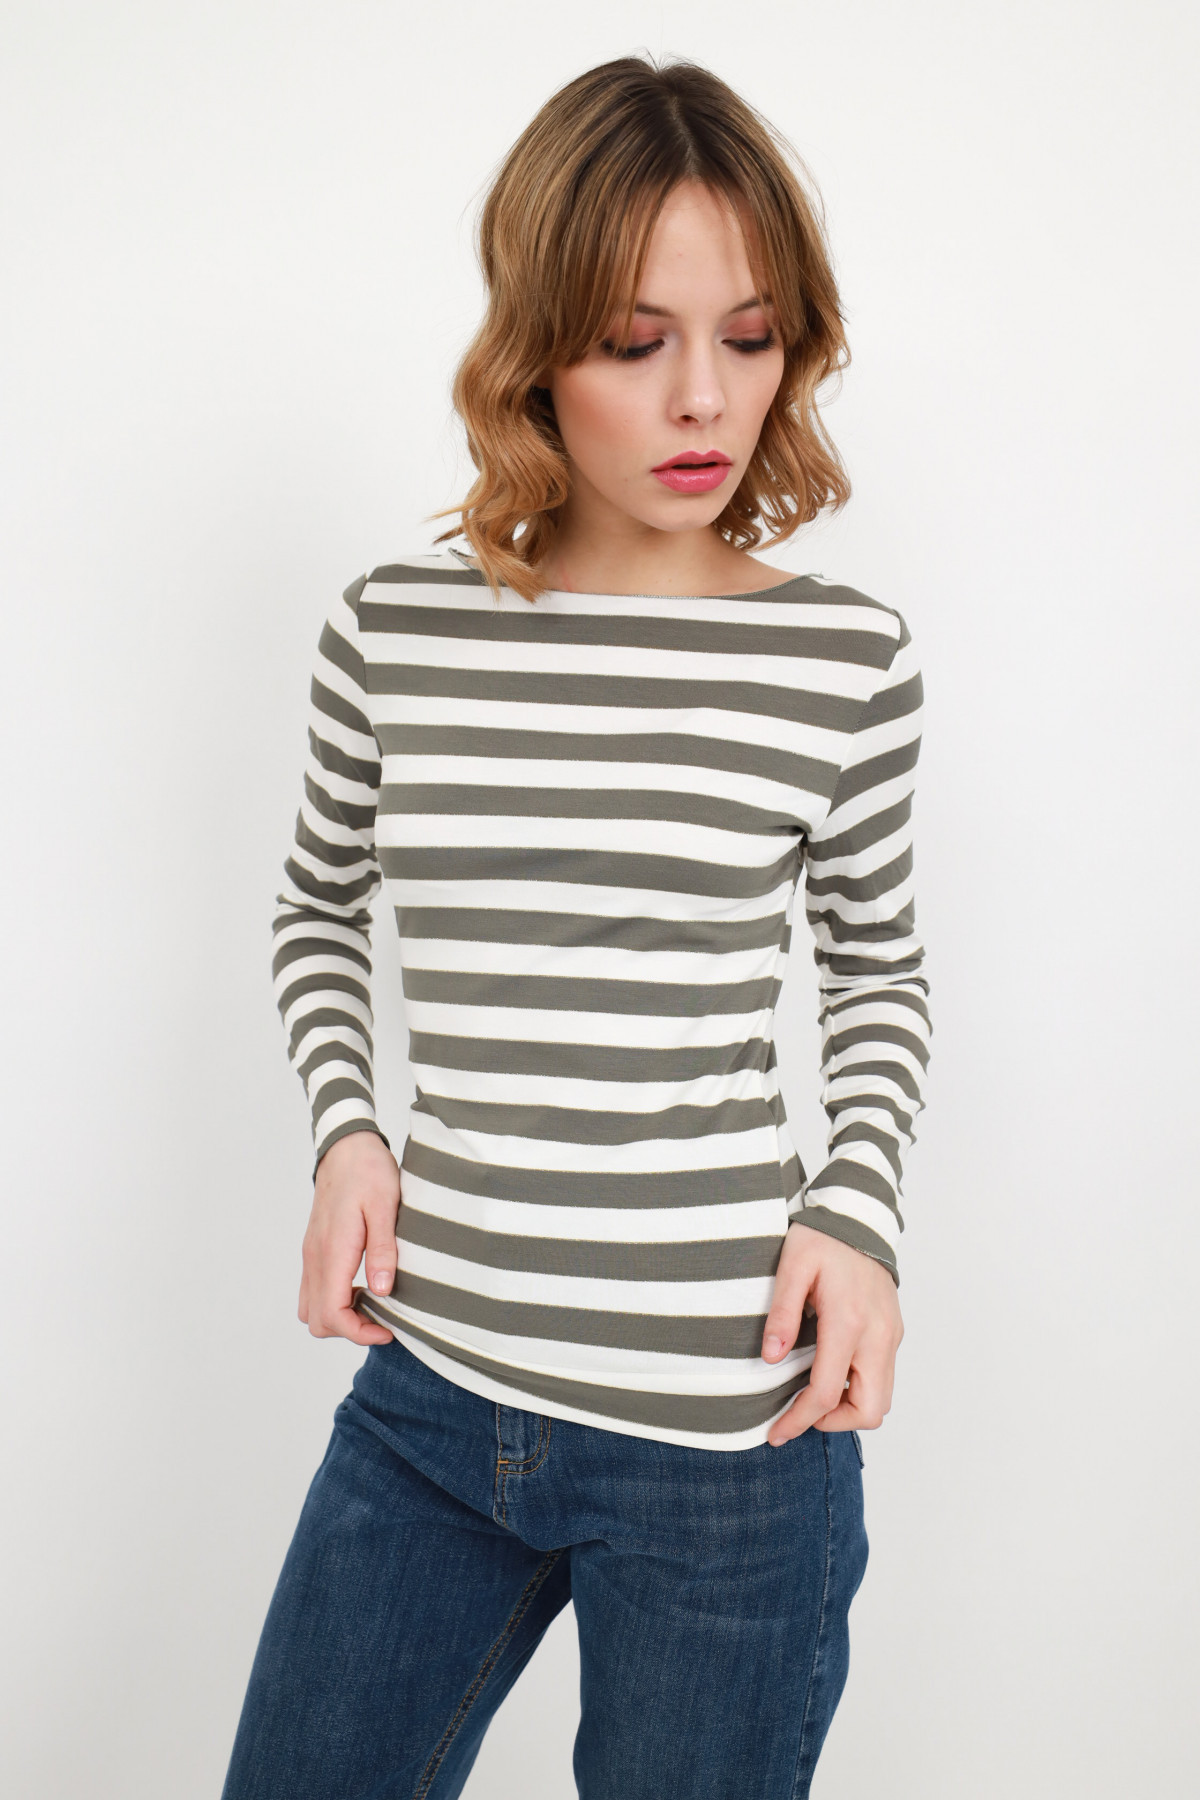 Striped boat shirt